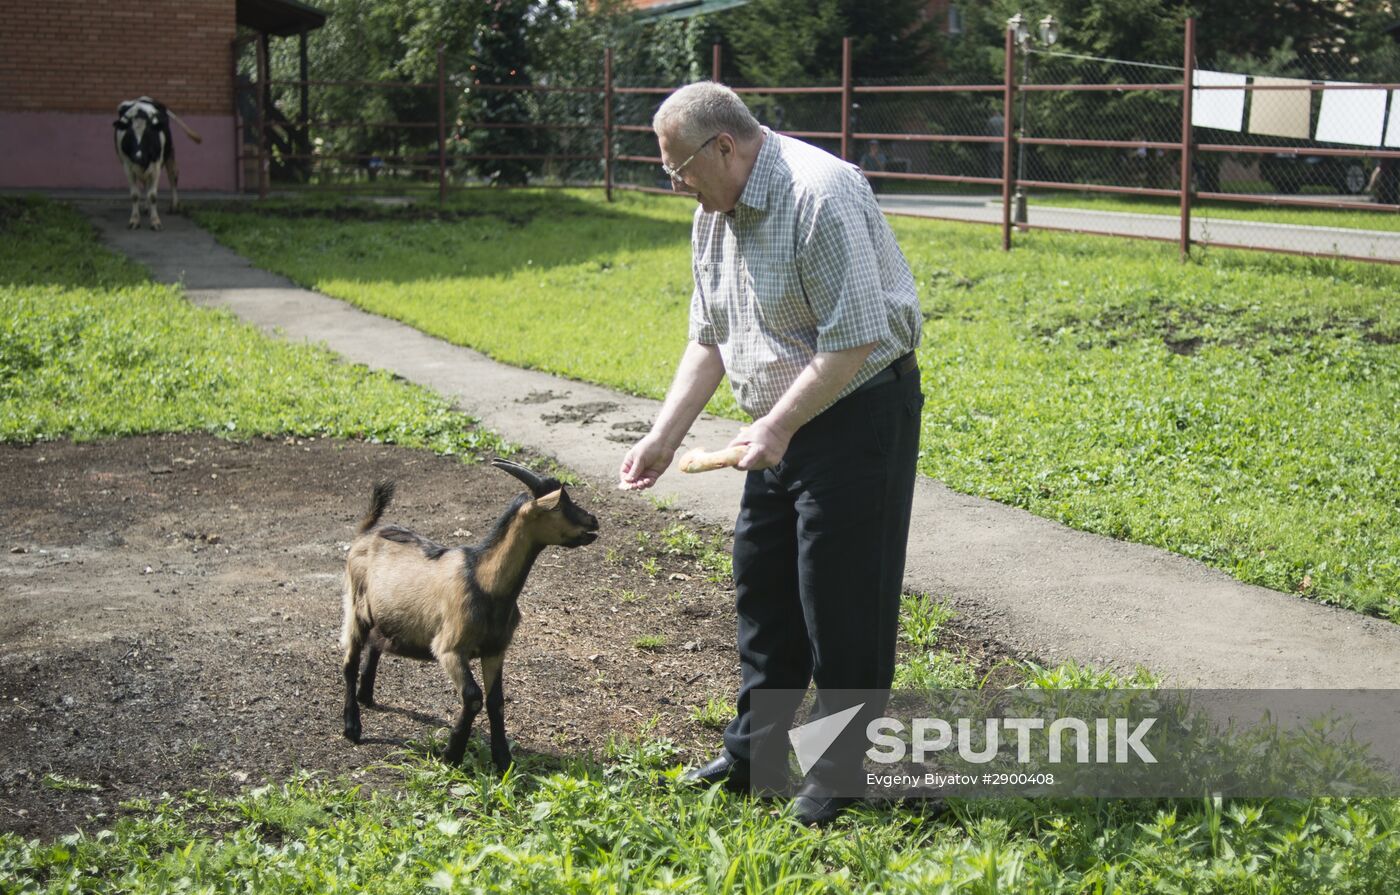 Vladimir Zhirinovsky's farm